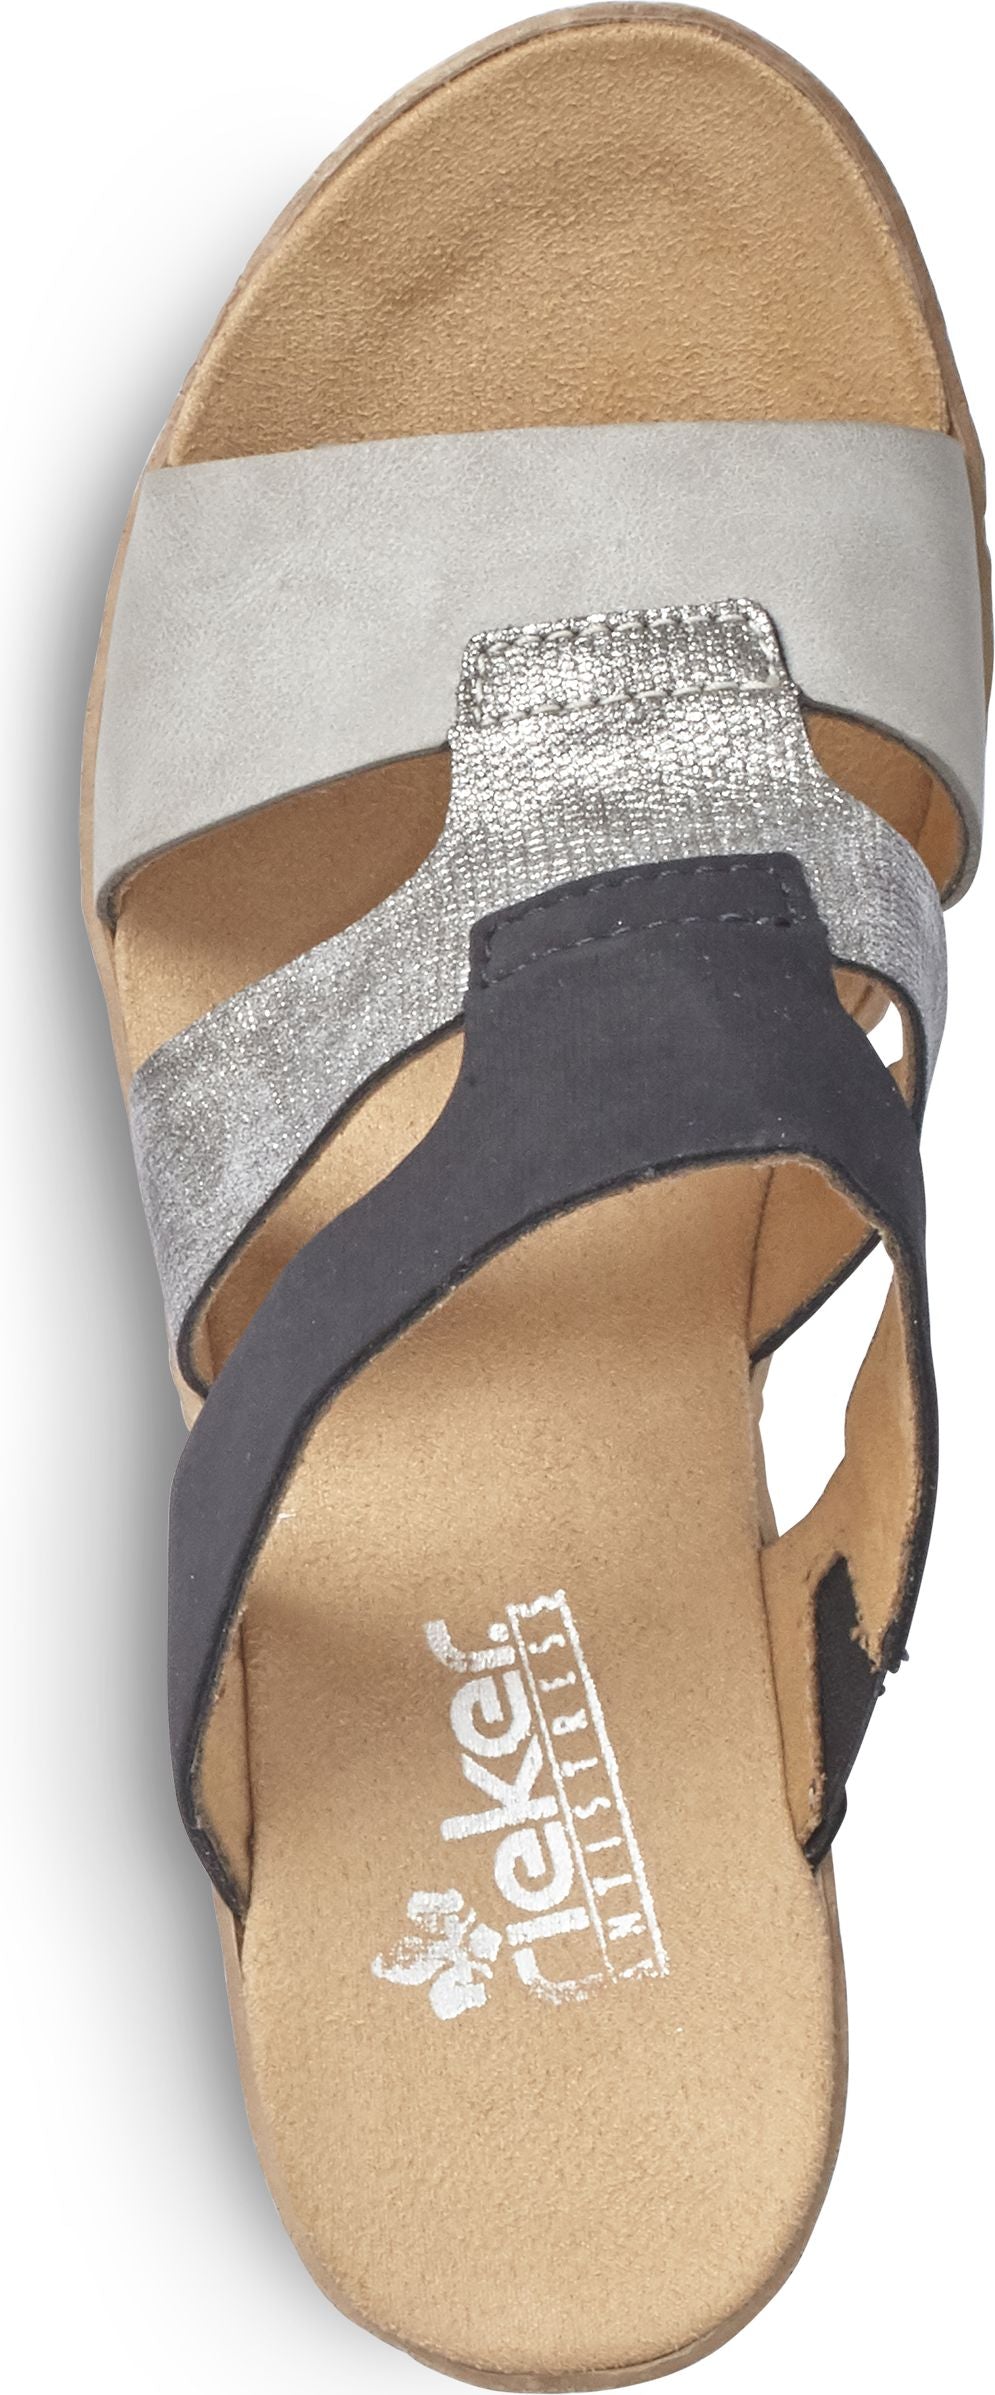 Rieker Sandals Black/silver/grey Wedge Slide